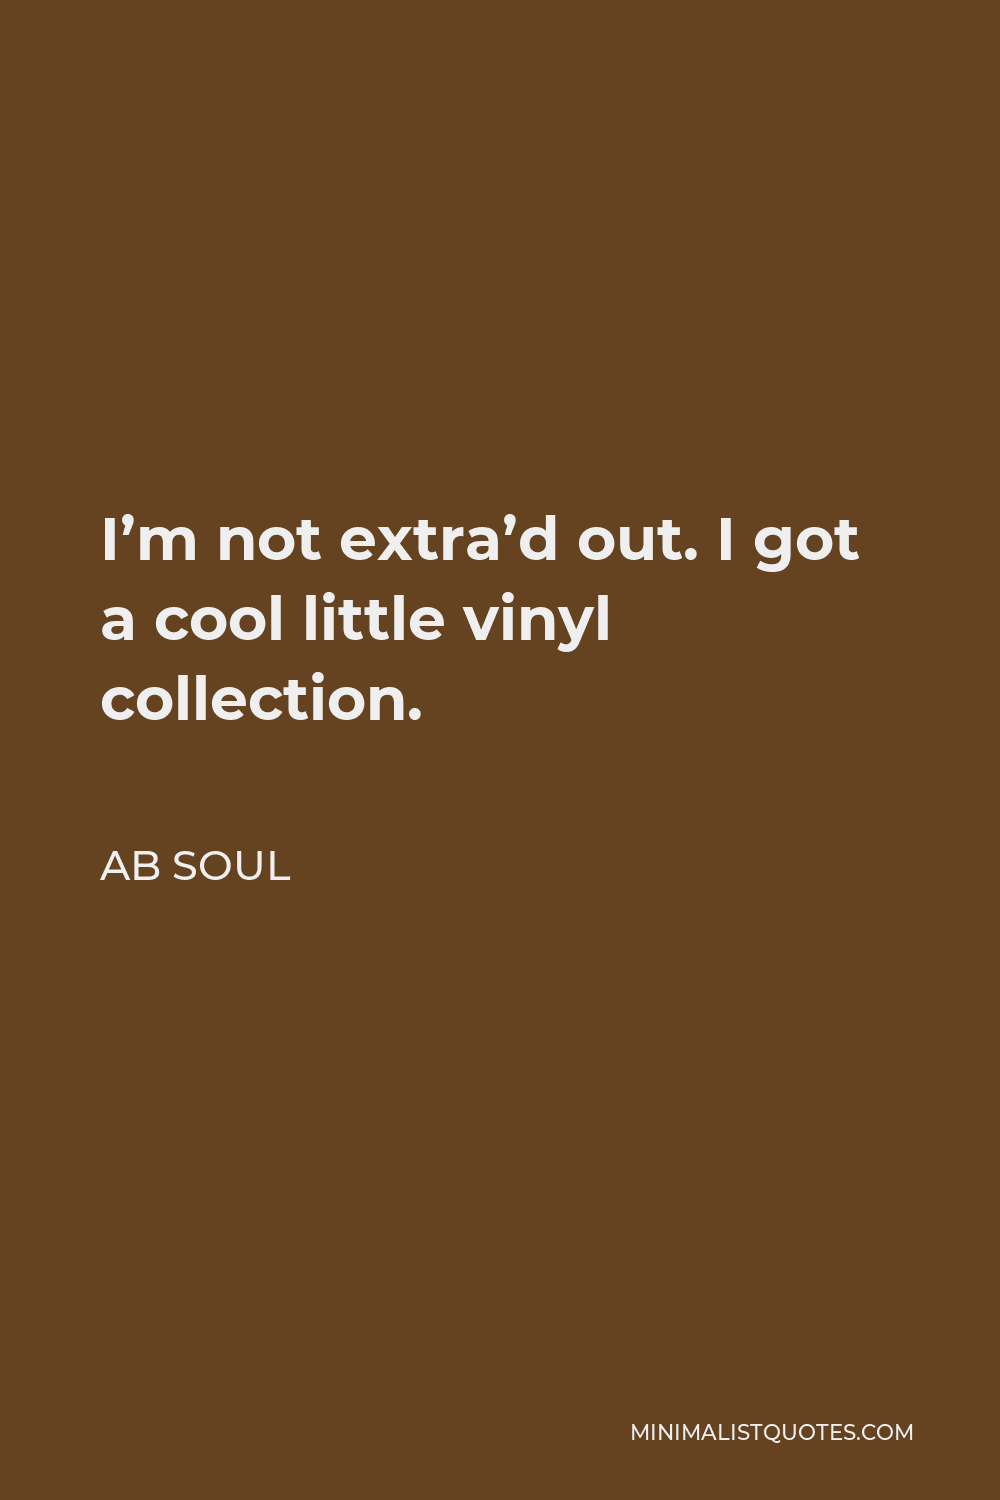 AB Soul Quote - I’m not extra’d out. I got a cool little vinyl collection.